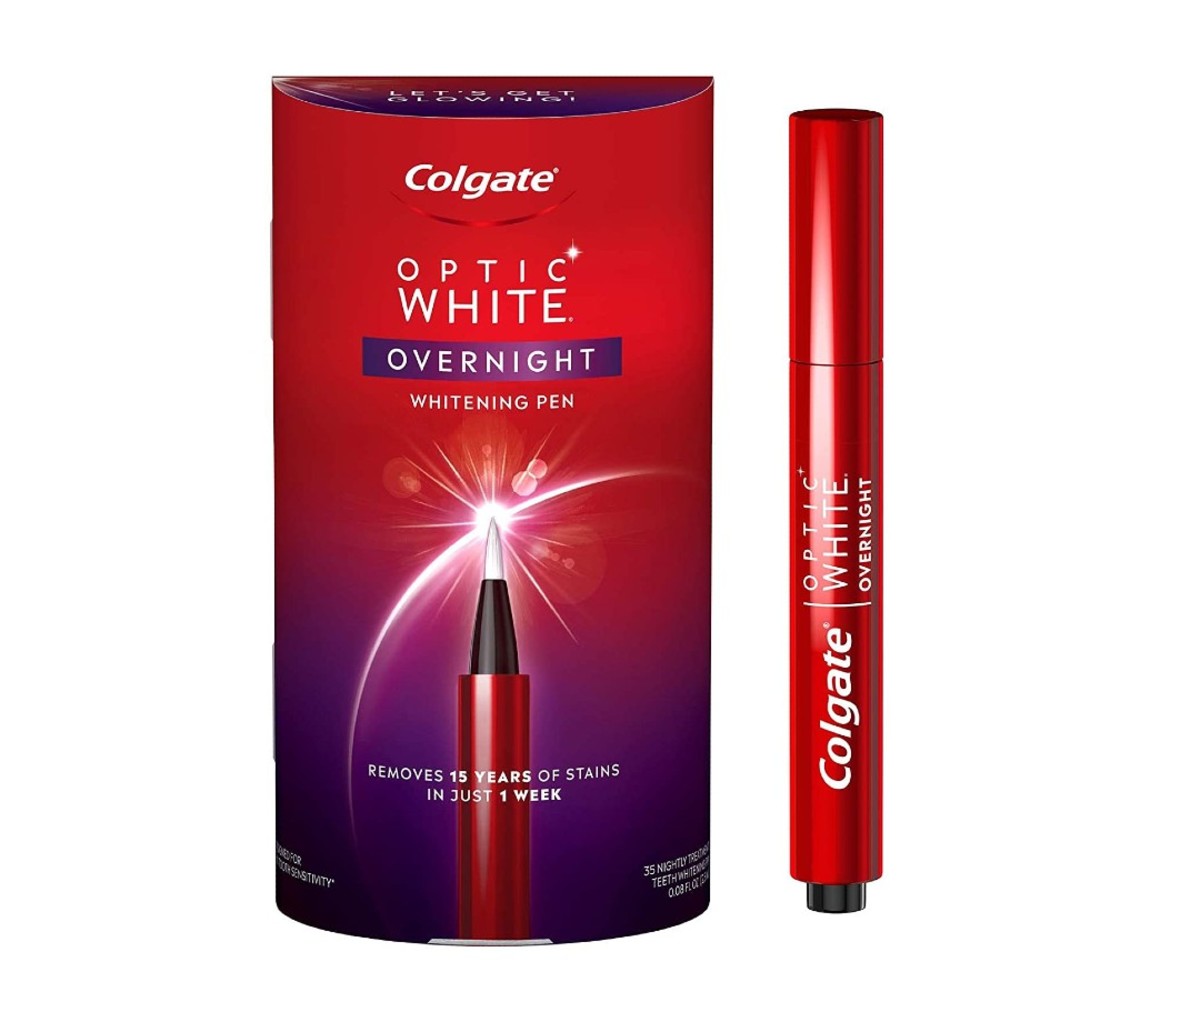 Colgate Optic White Whitening Pen